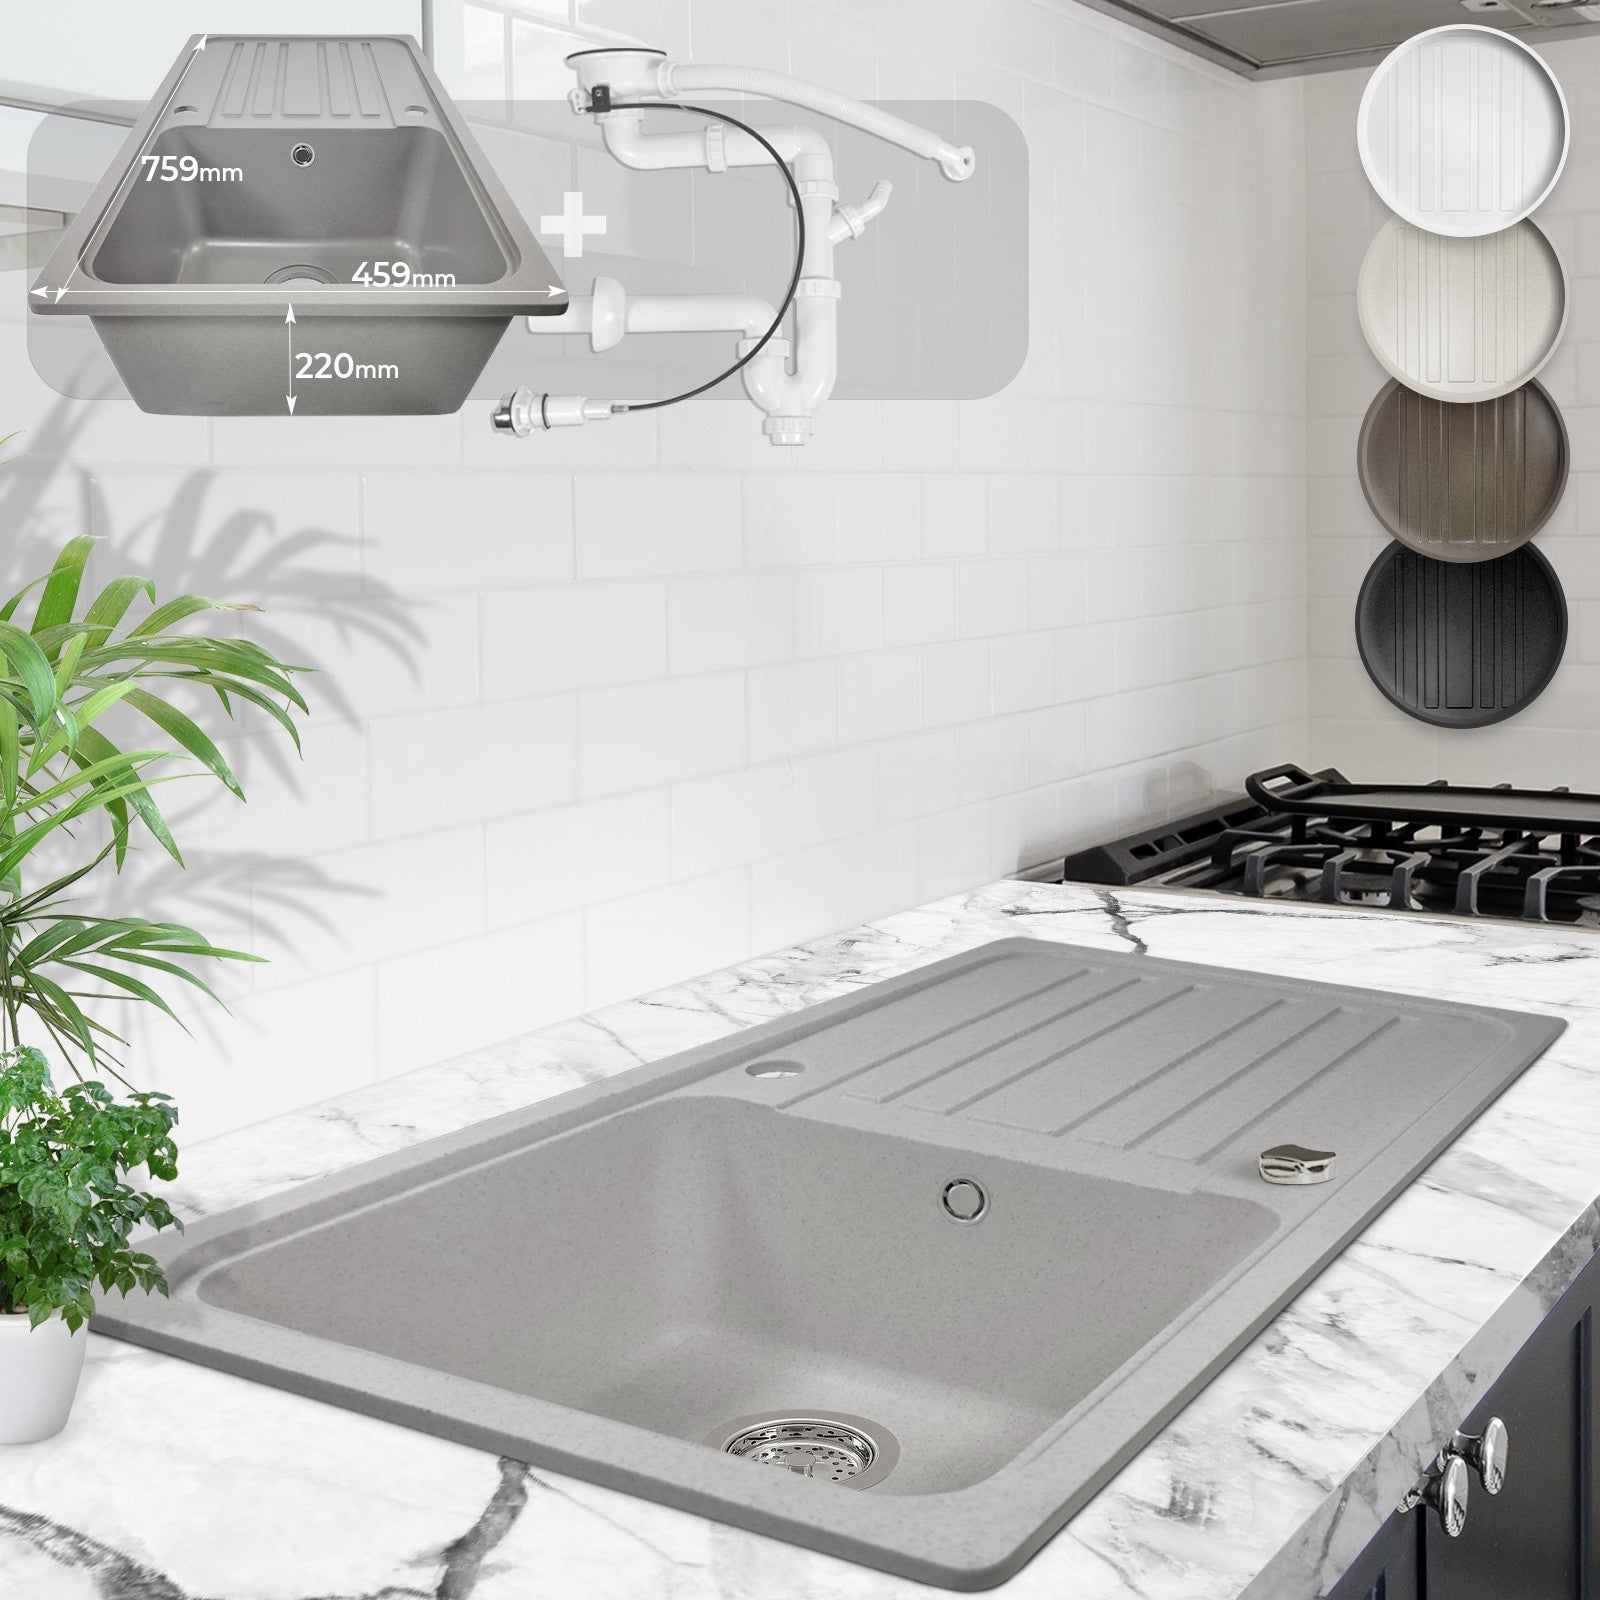 9: Køkkenvask i granit m/ afløb, vendbart afløb, rektangulært, vendbart, plettet, grå